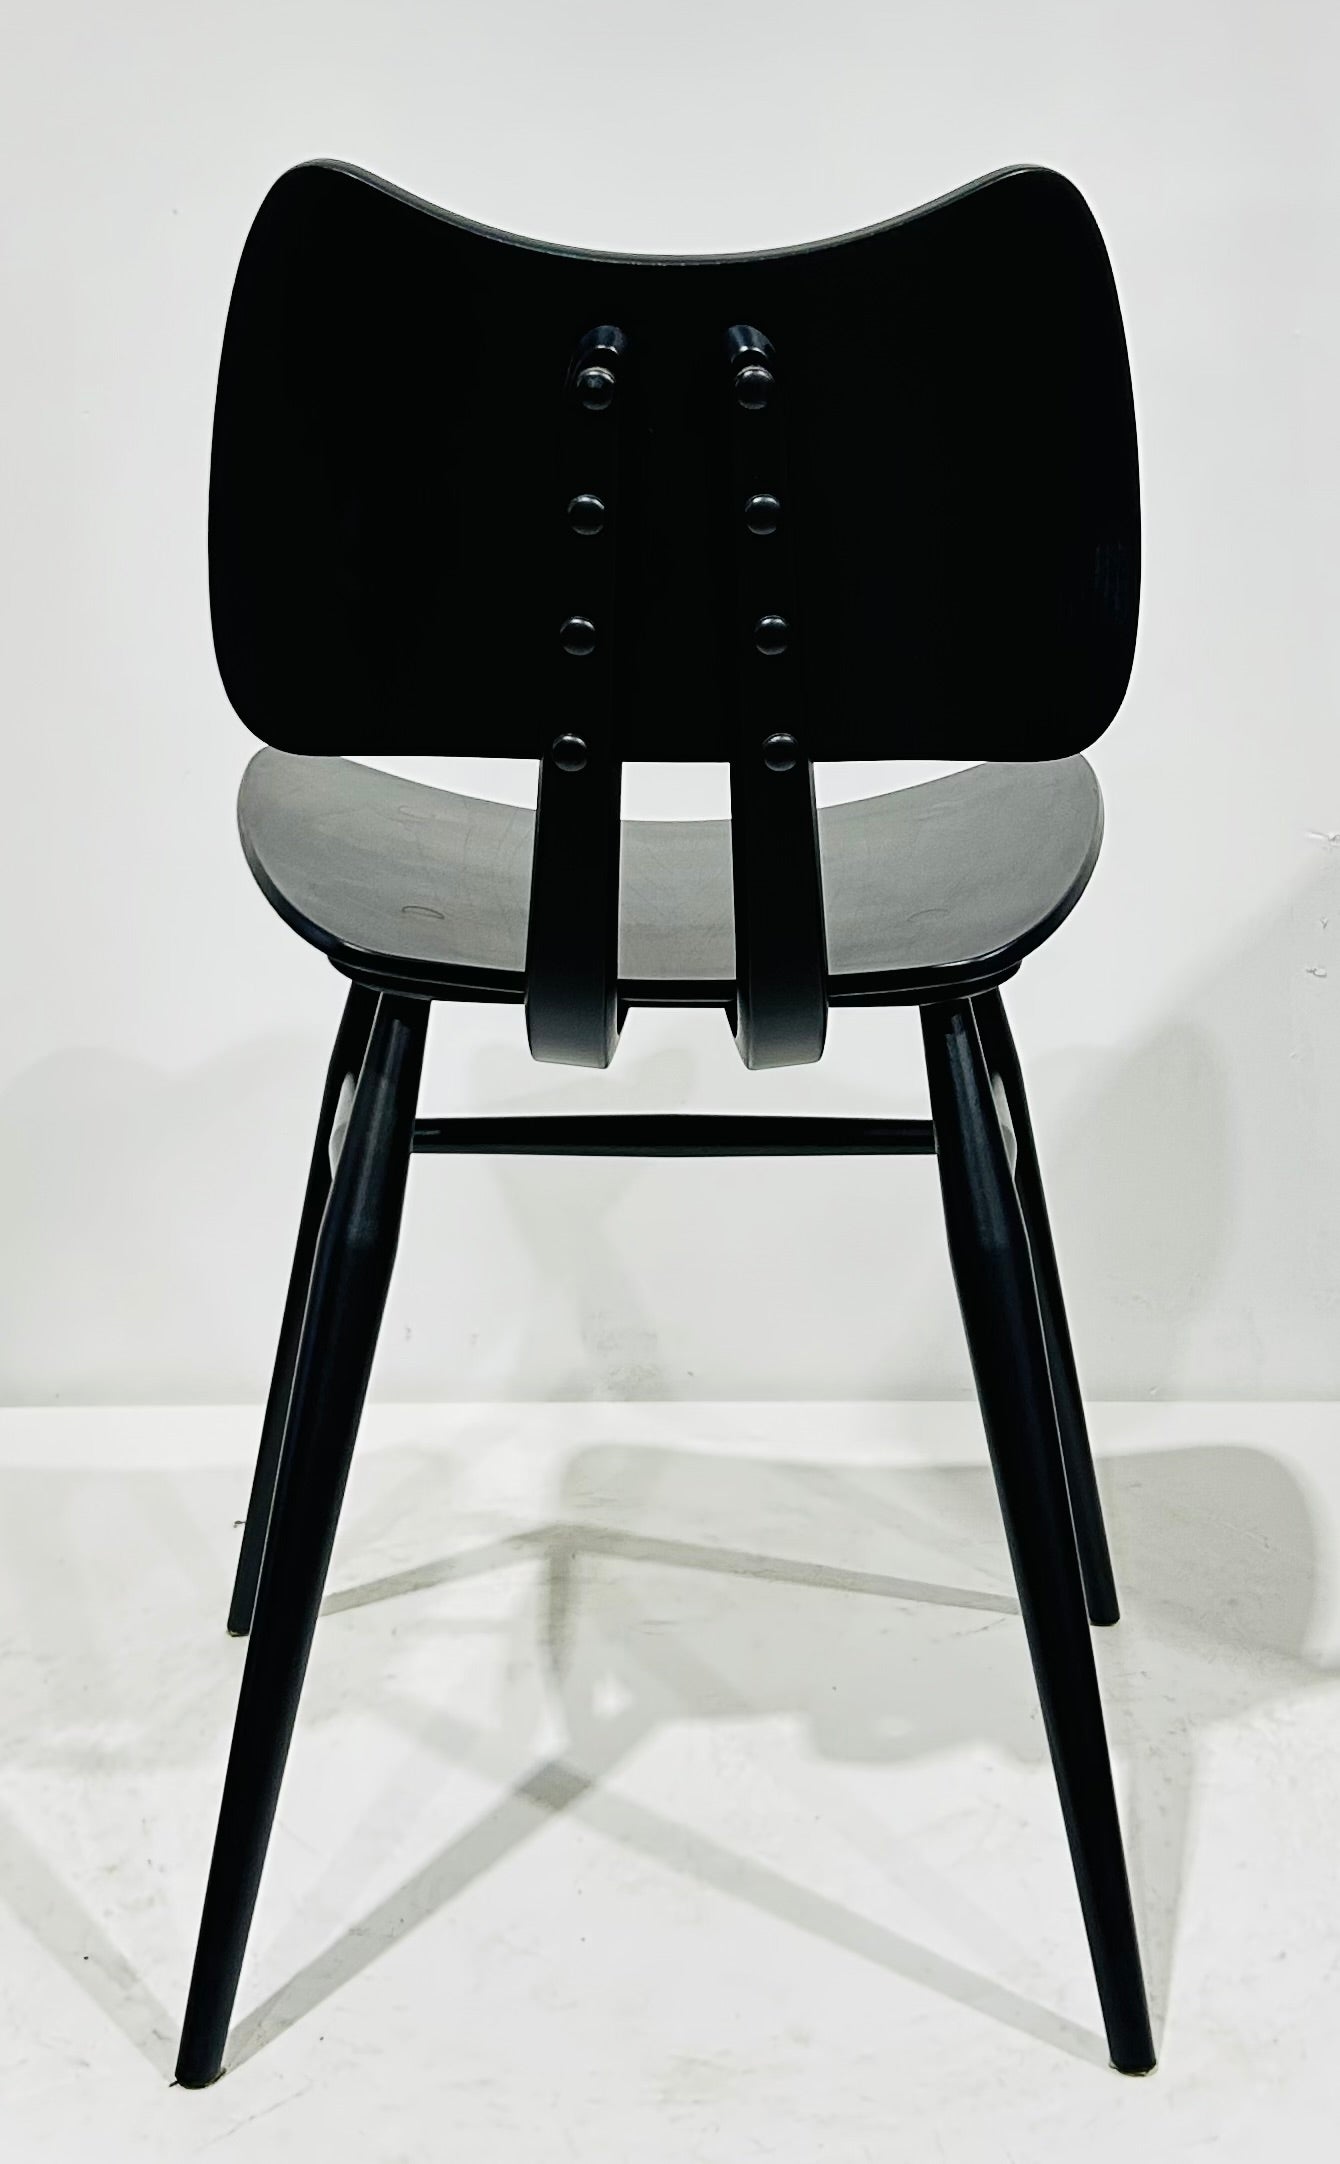 L.Ercolani - Butterfly Chair - Black